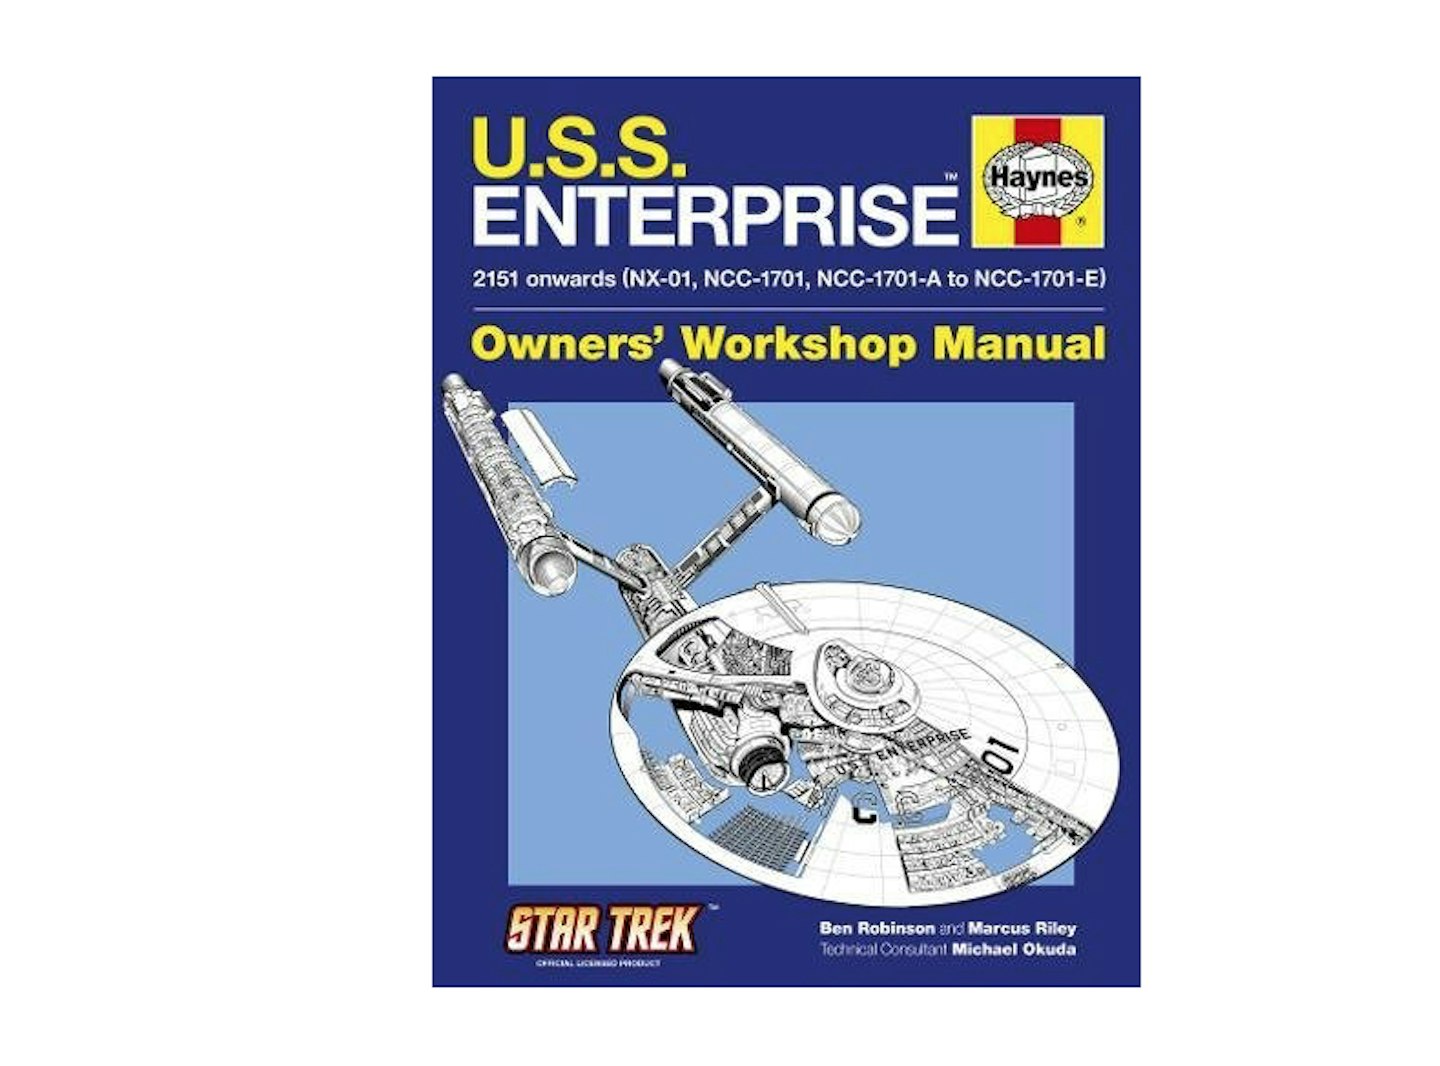 U.S.S. Enterprise Manual